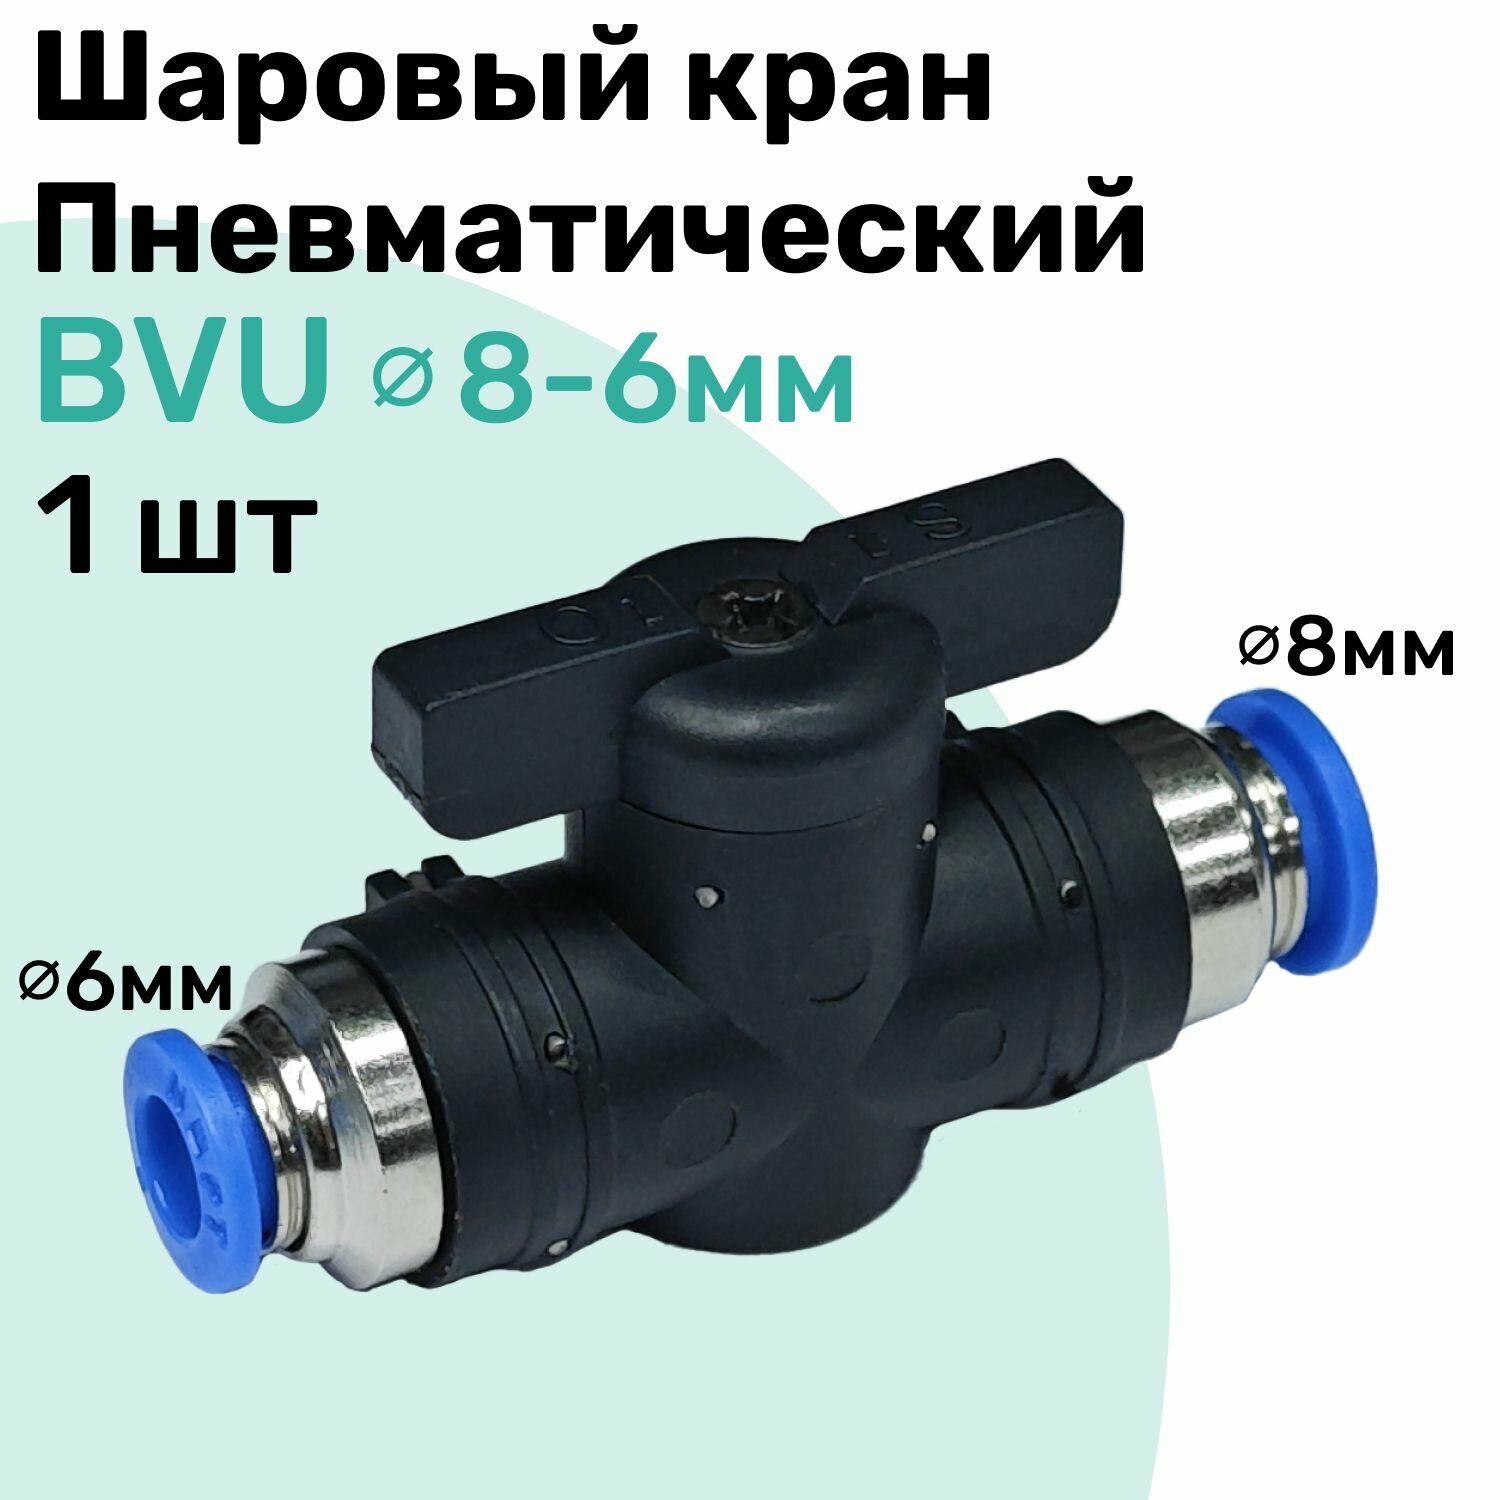 Шаровый кран пневматический BVU 8-6 мм, Пневмофитинг NBPT